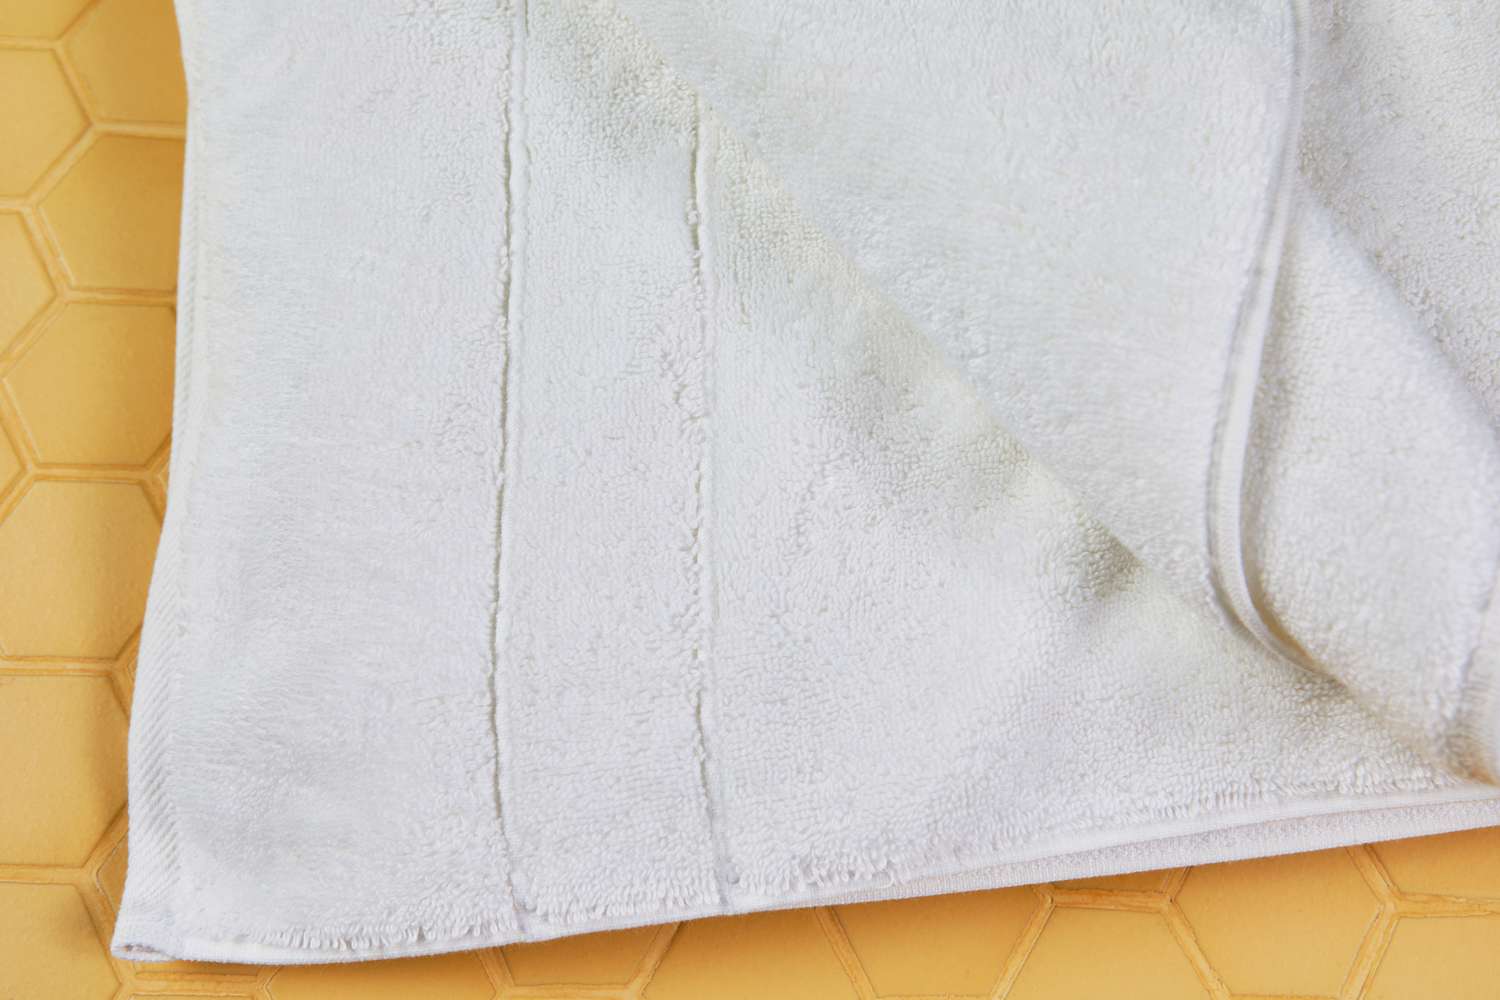 Brooklinen Super-Plush Bath Towels close up details